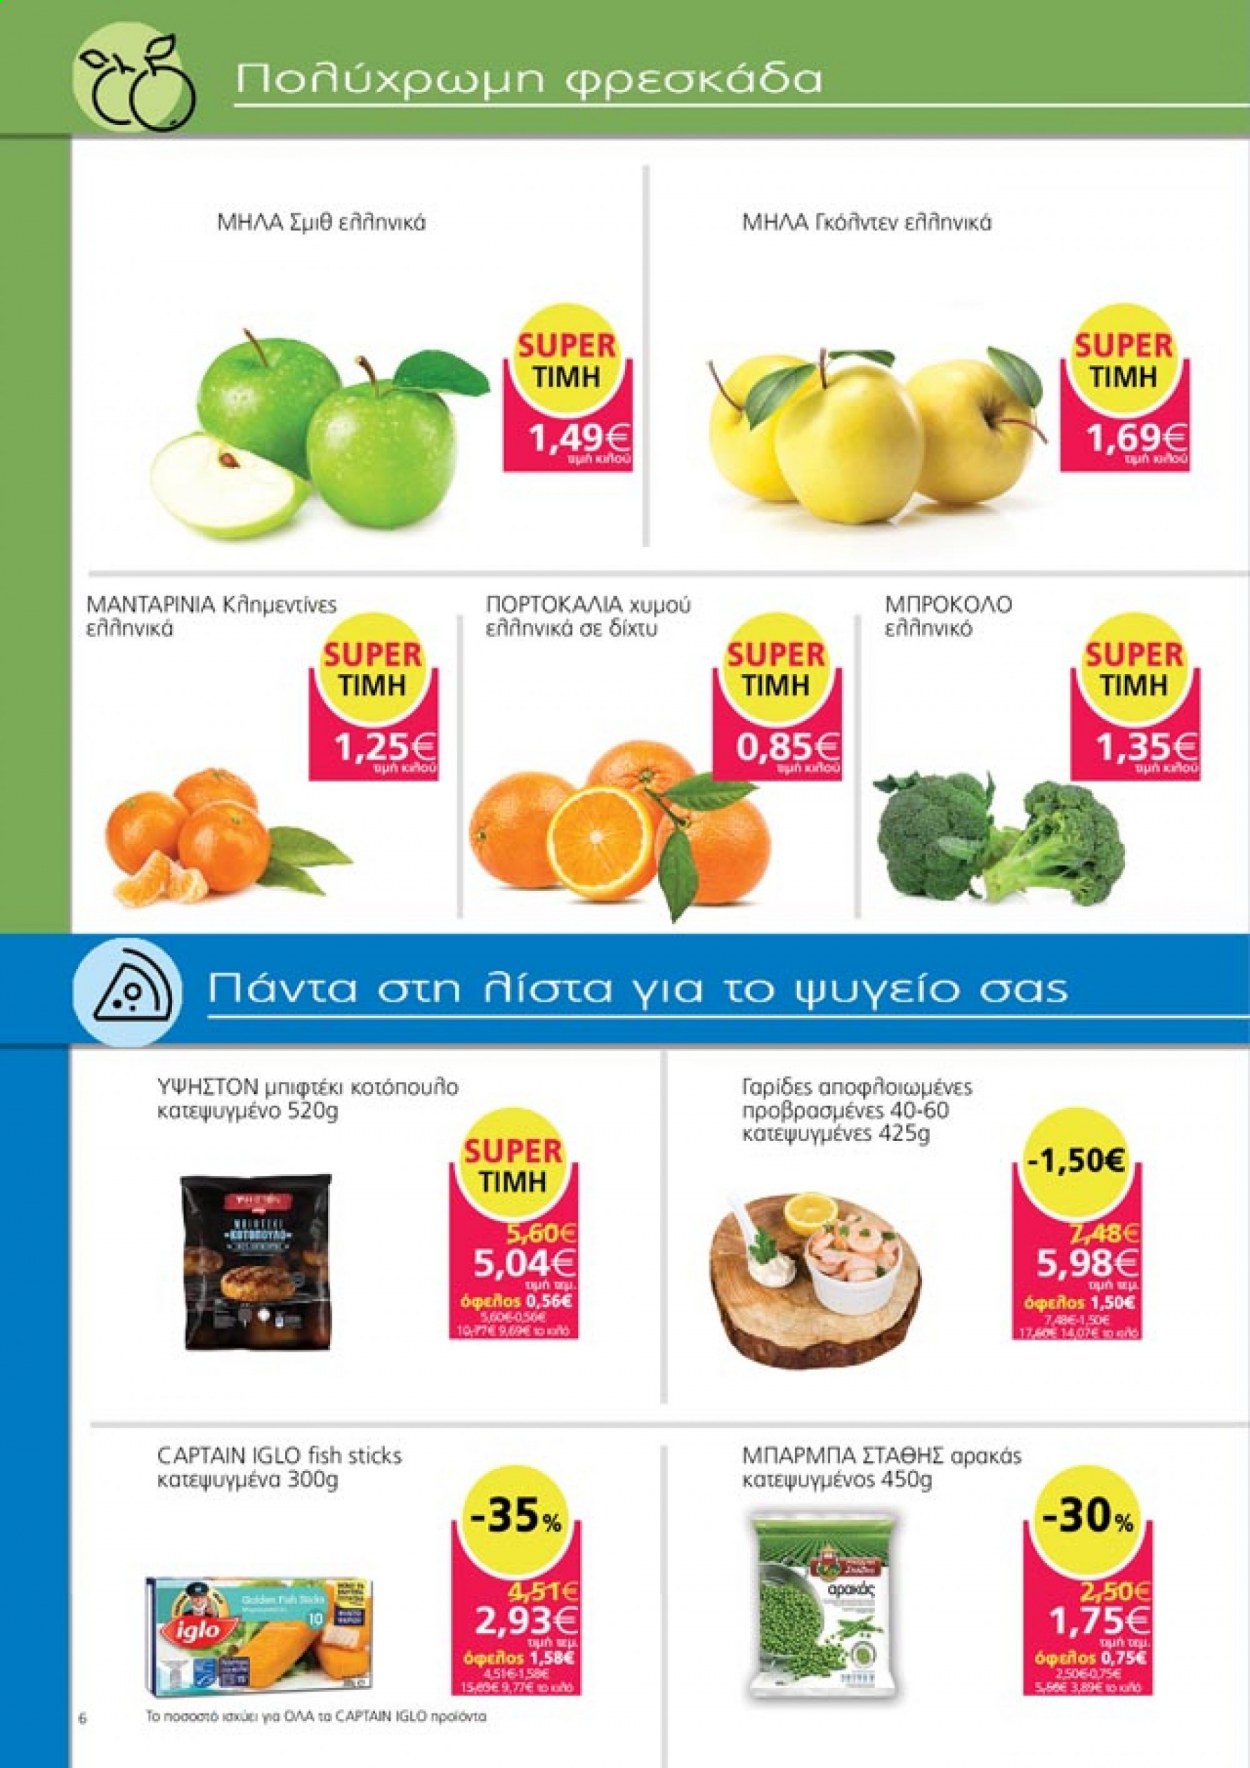 thumbnail - Φυλλάδια My market - 07.01.2021 - 19.01.2021 - Εκπτωτικά προϊόντα - μπρόκολο, μήλα, κλημεντίνες, μανταρίνια, πορτοκάλια, κοτόπουλο, γαρίδες. Σελίδα 6.